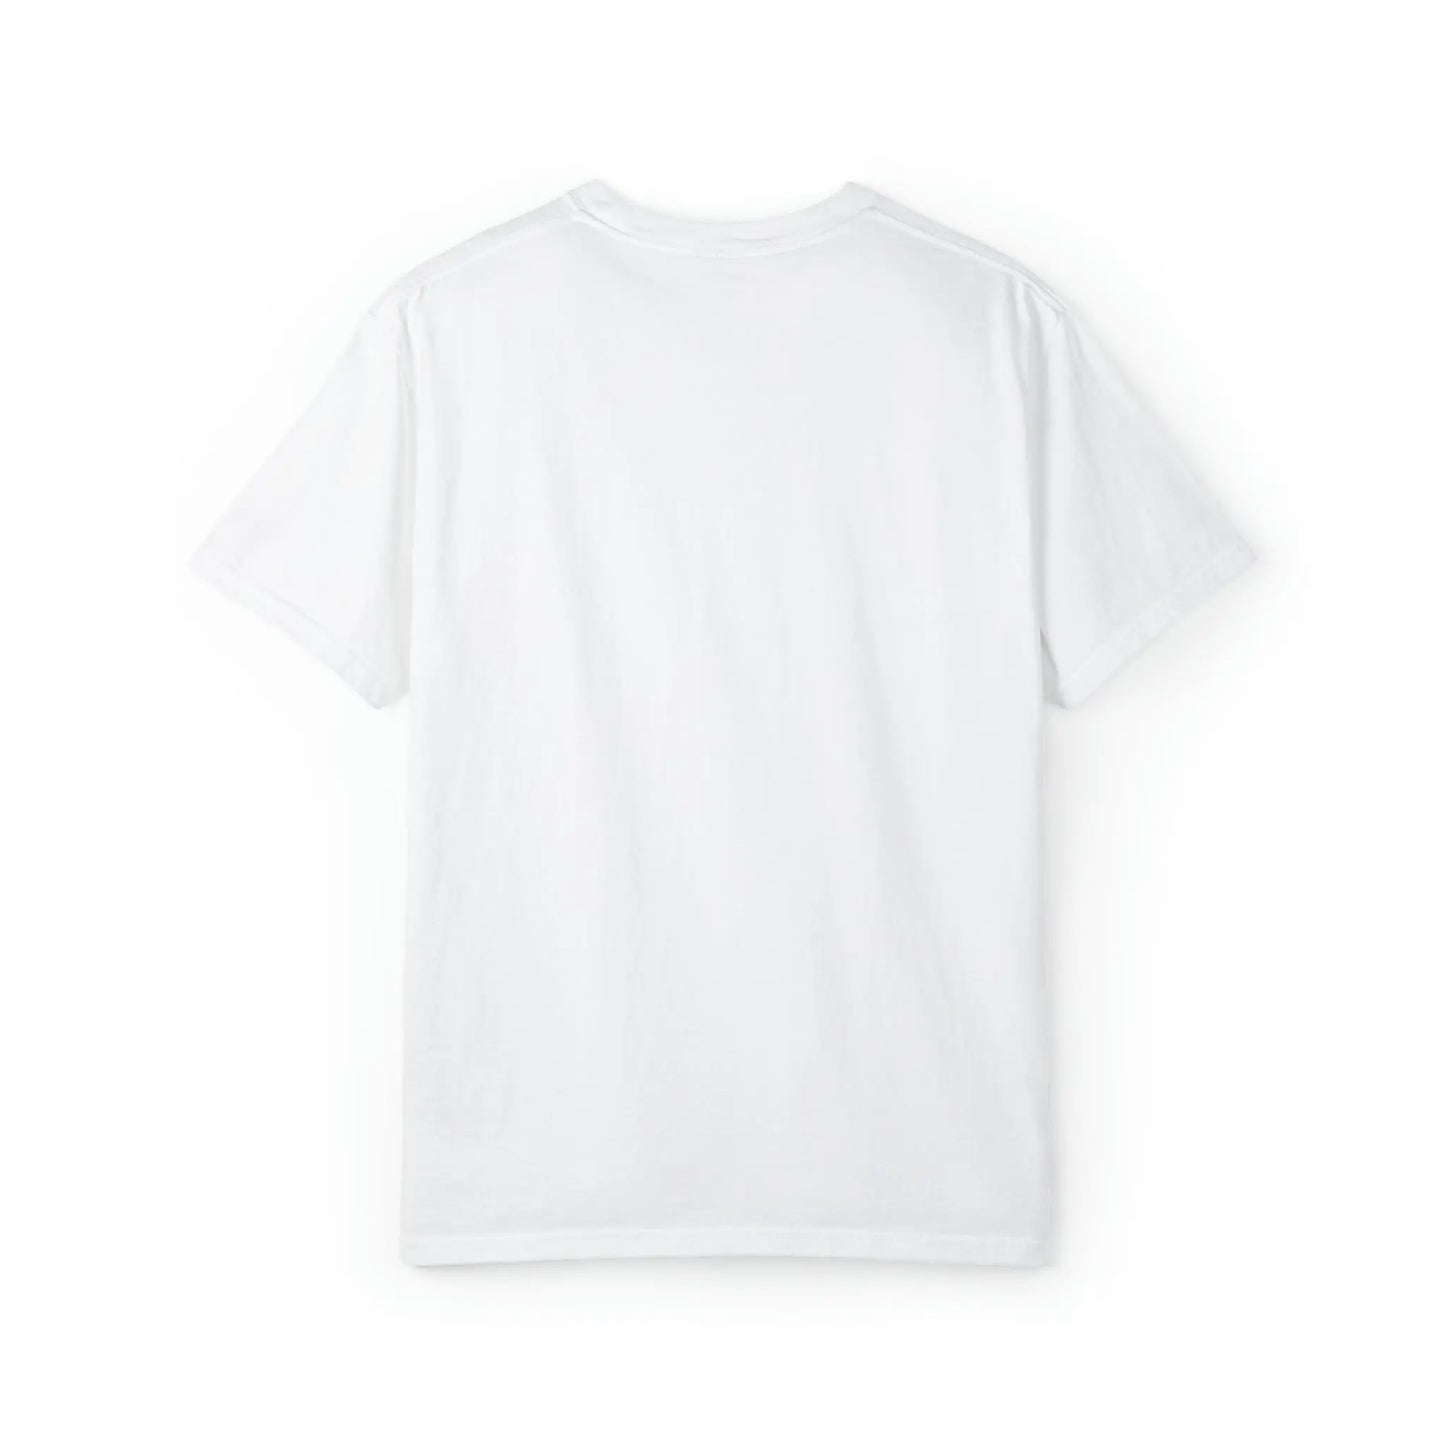 Unisex Garment-Dyed T-shirt  Thunderbird Speed Shop